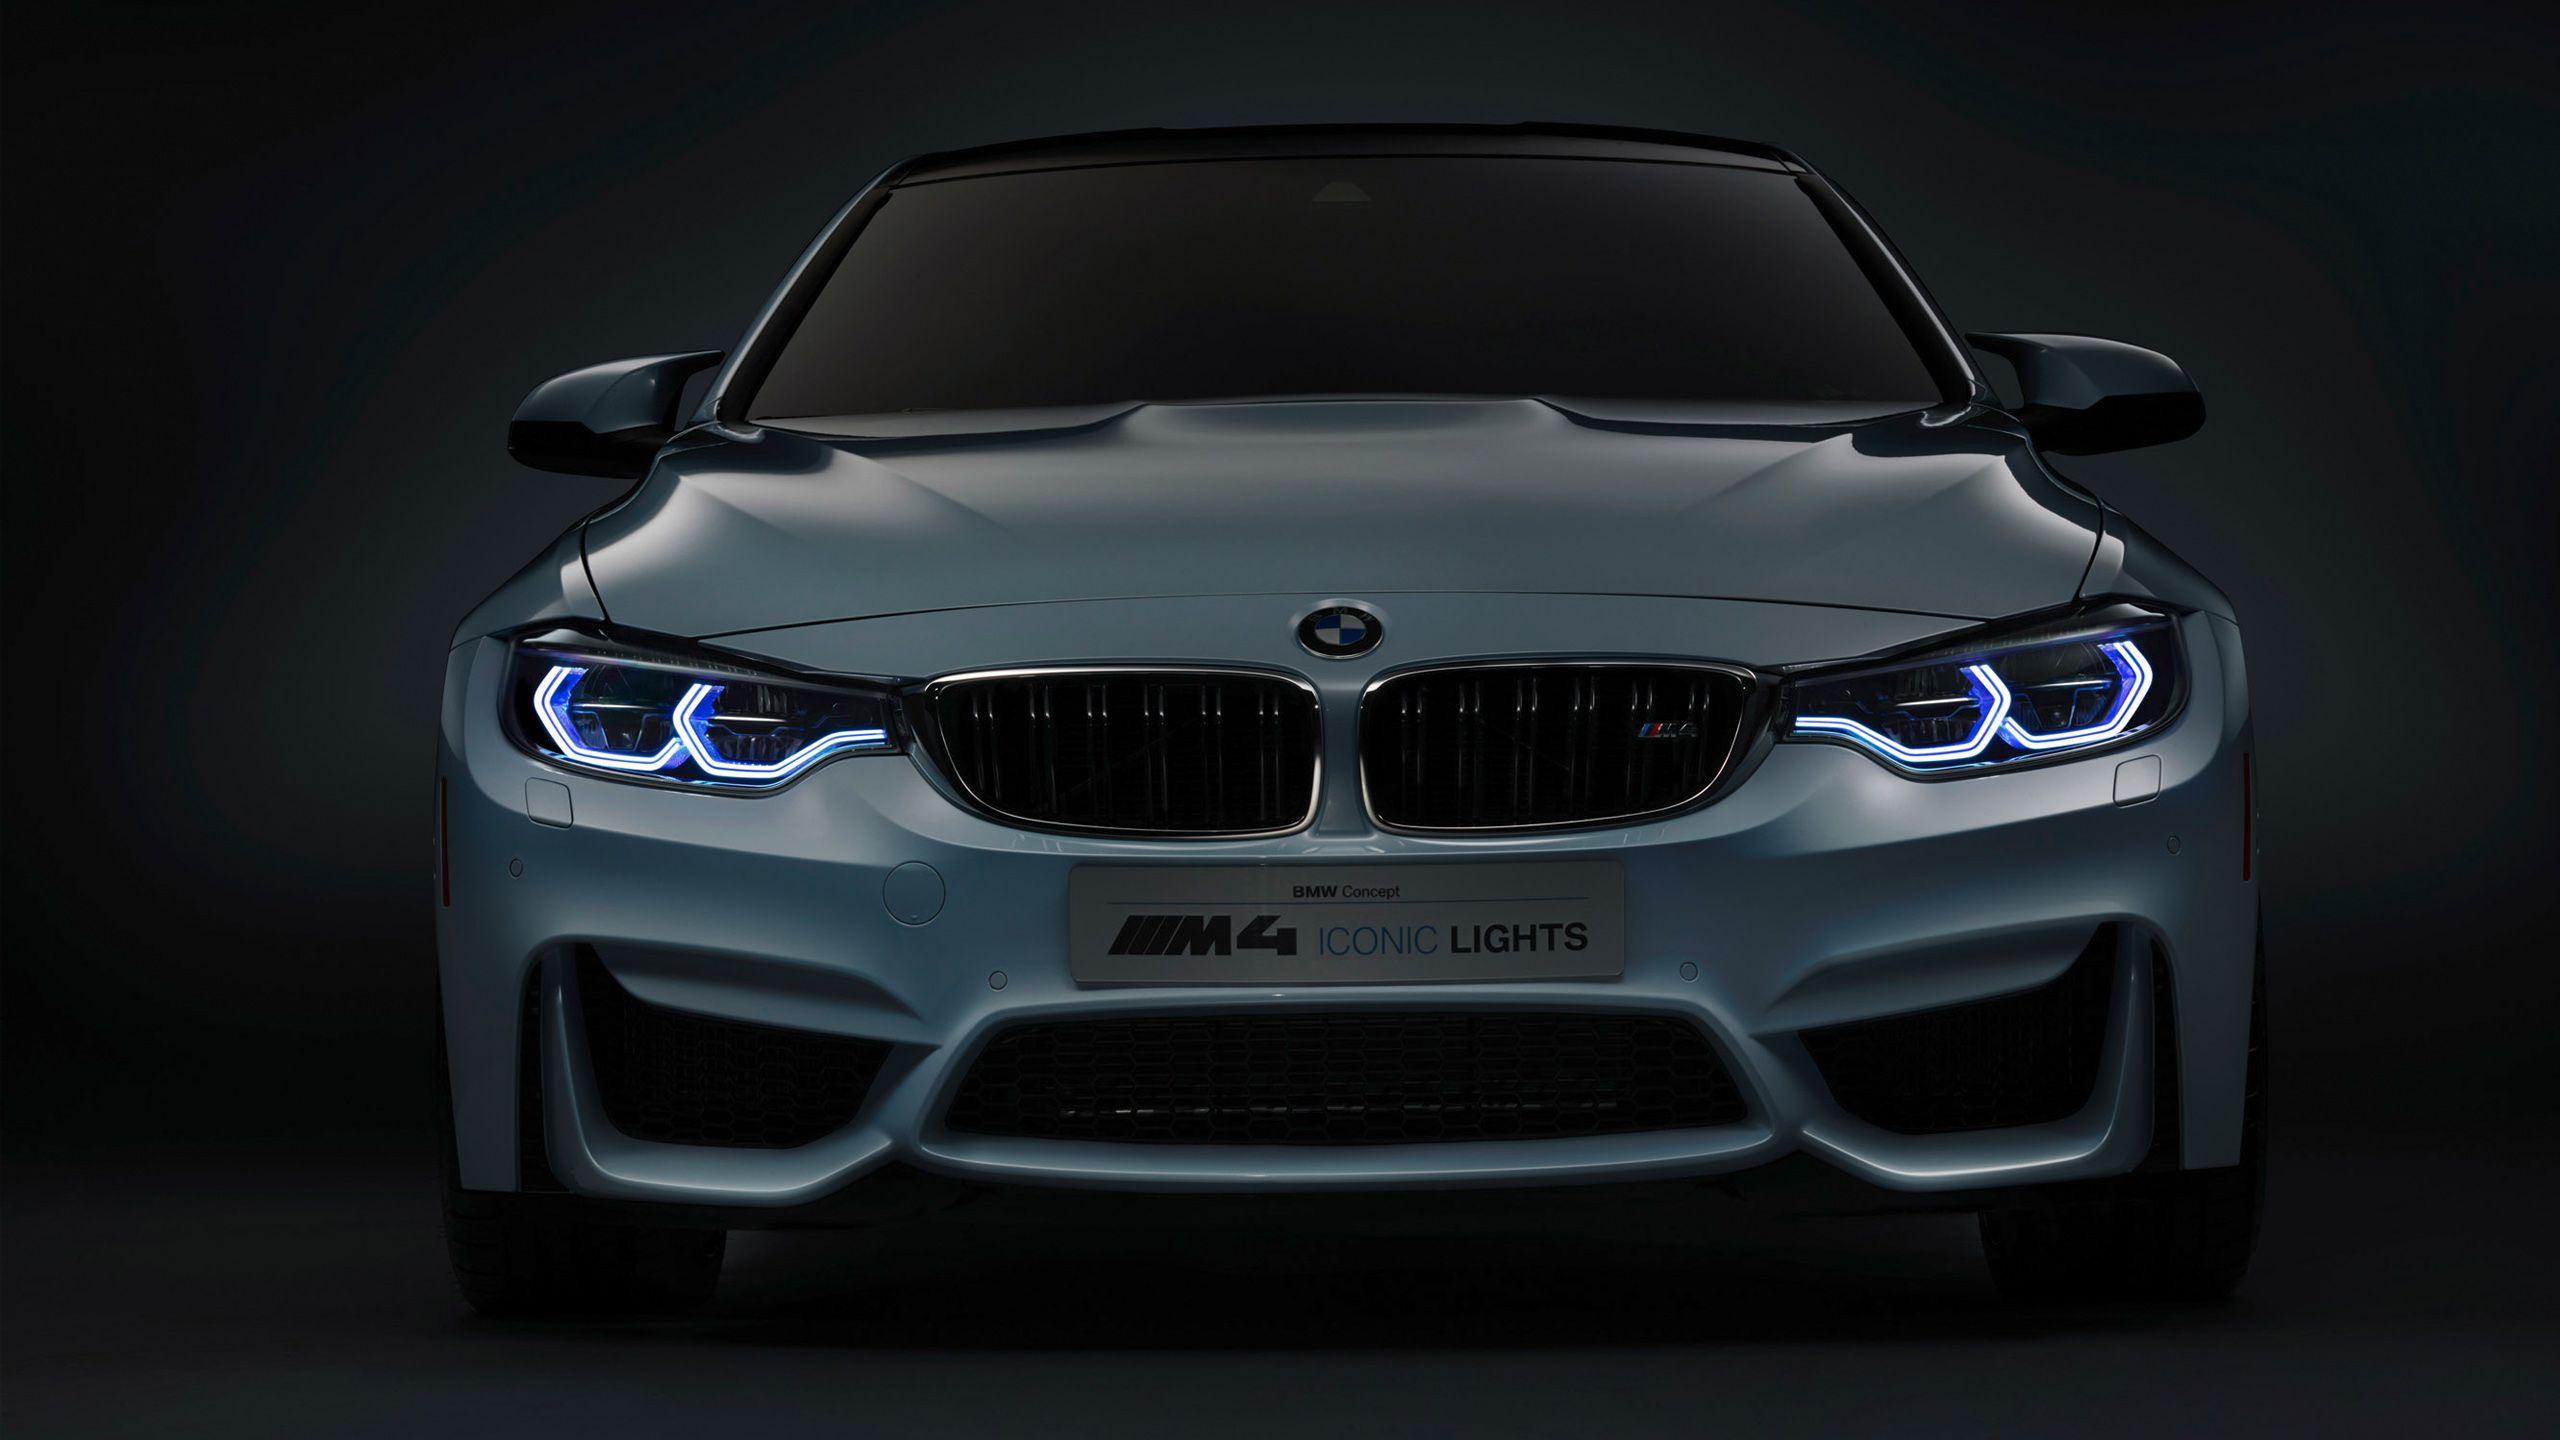 BMW M4 Concept Iconic Lights Wallpaper. HD Car Wallpaper